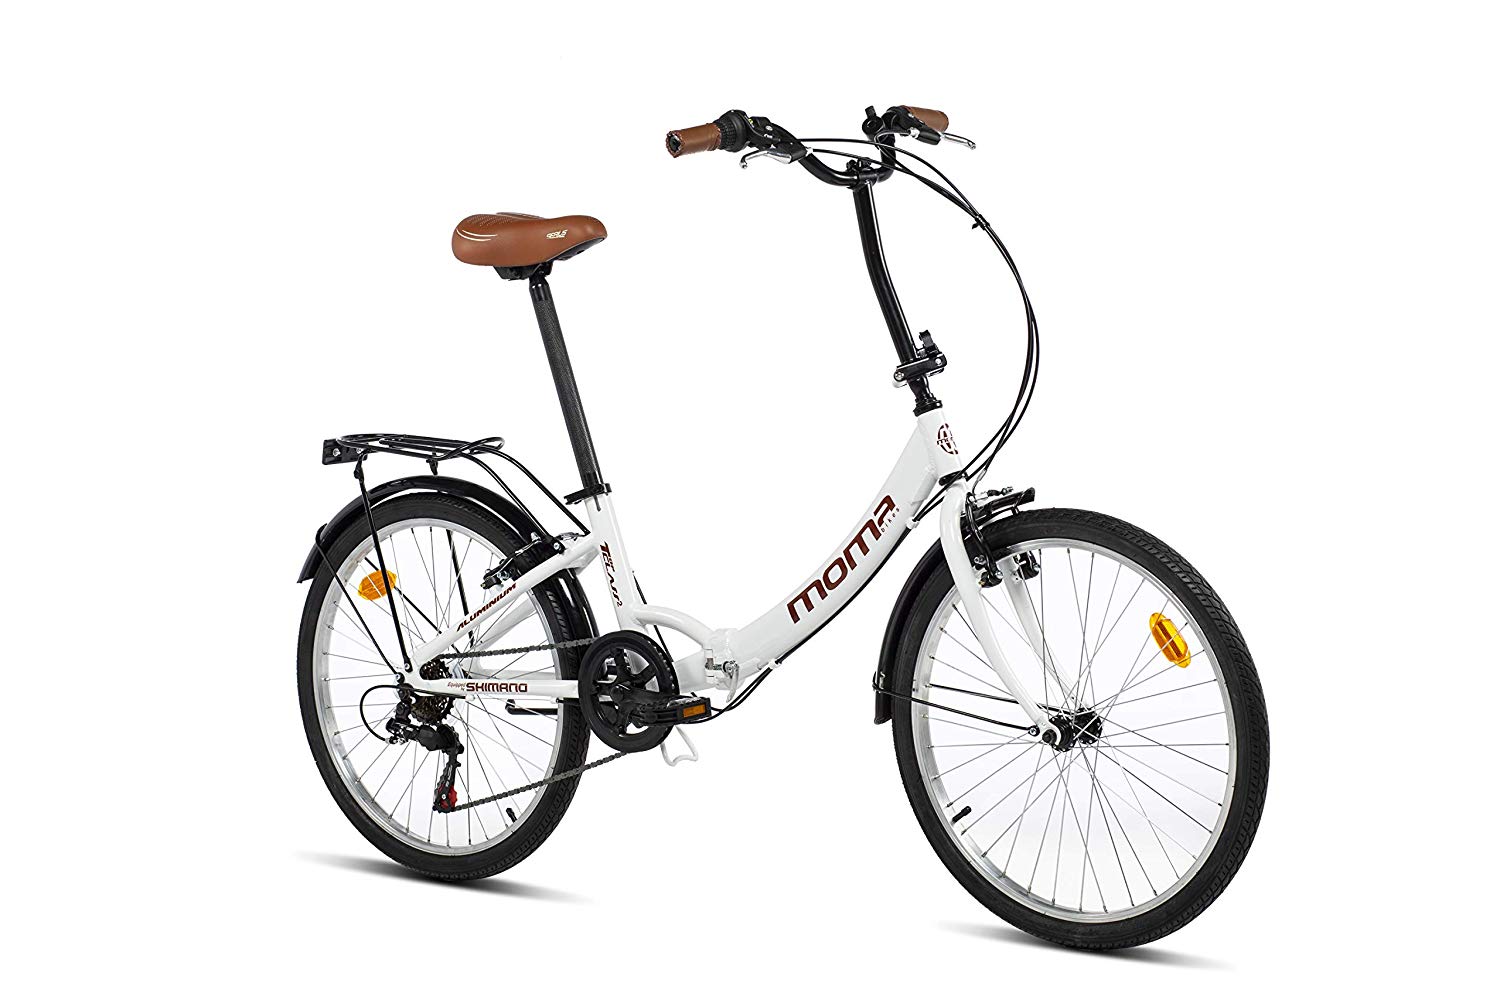 Bicicleta plegable Moma solo 219,9€